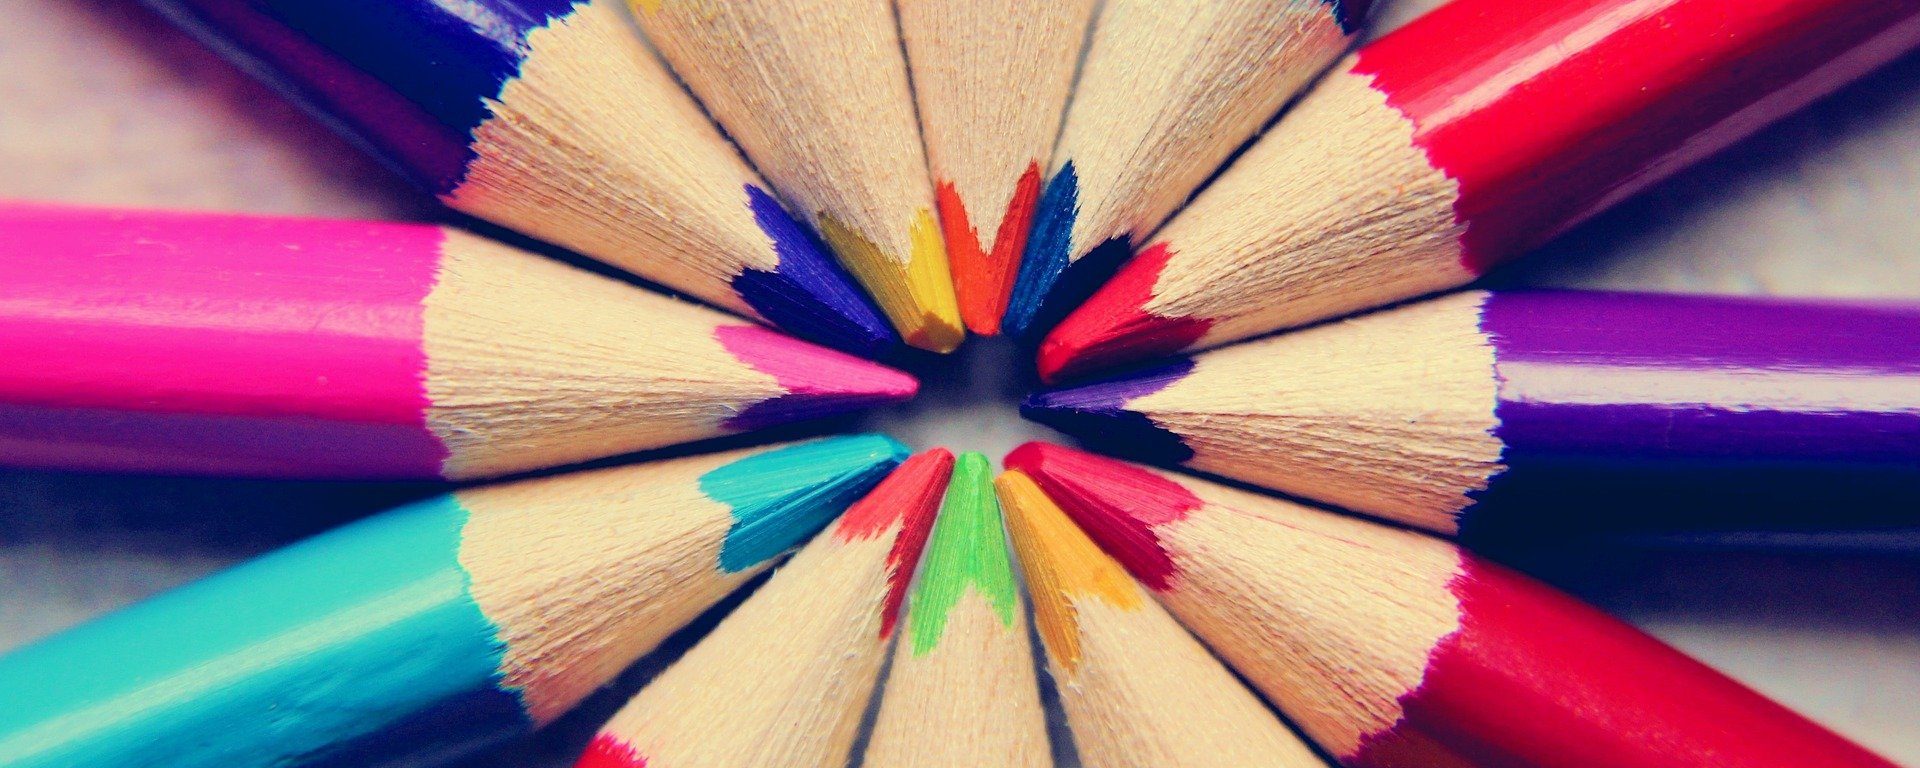 Colored Pencils 4031668_1920